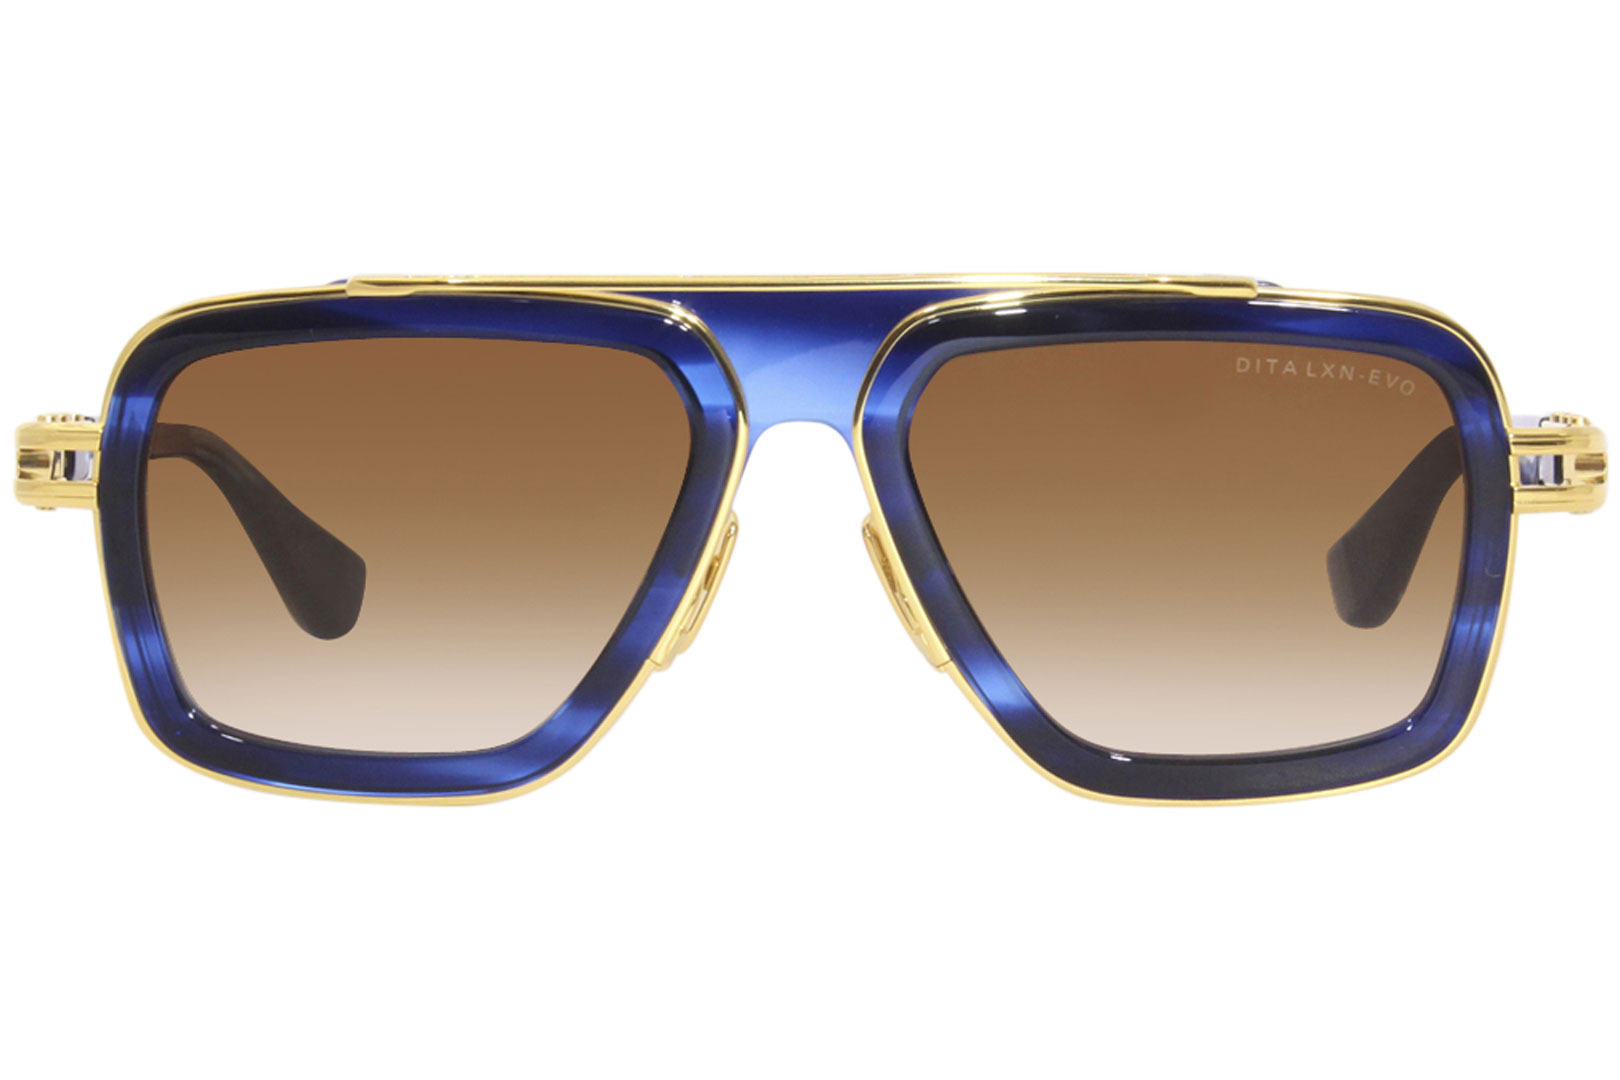 Dita Lxn-Evo DTS403 A-04 Sunglasses Men's Sienna Blaze/Grey Gradient ...